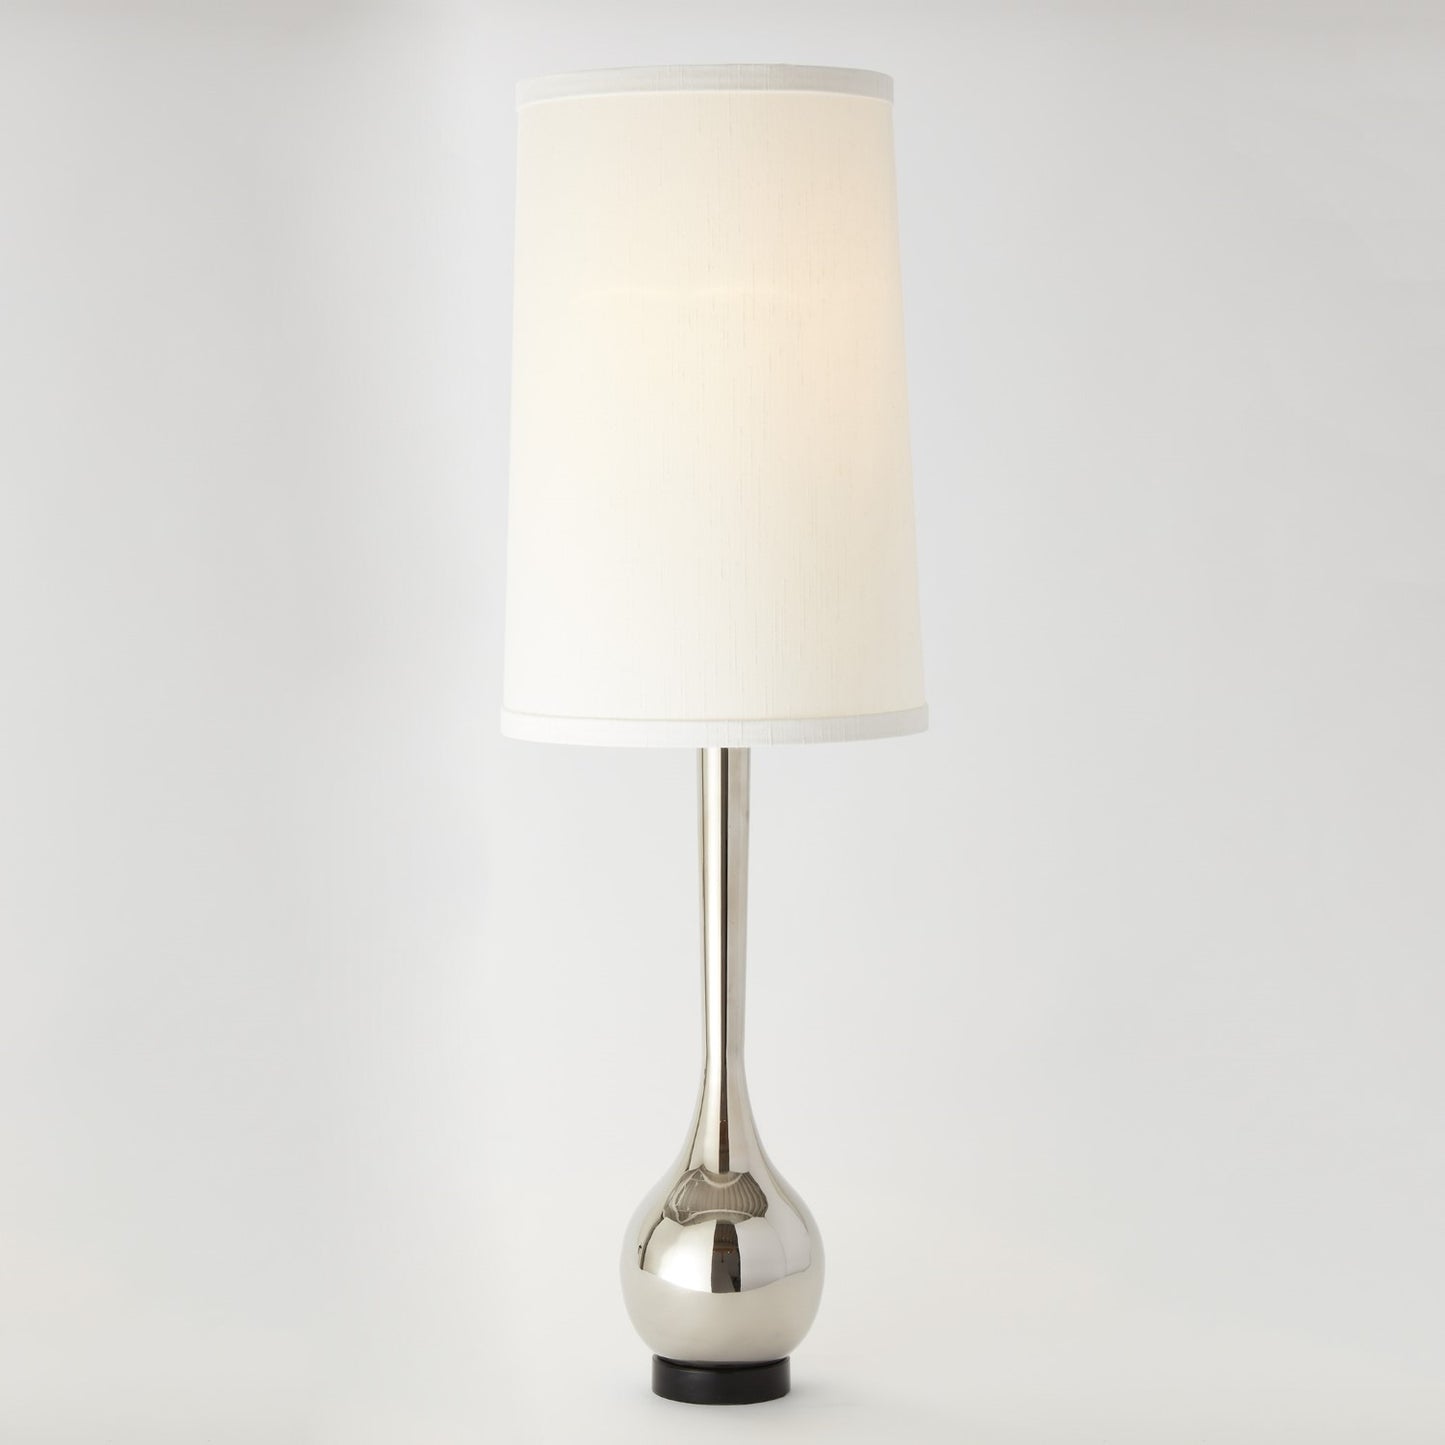 Bulb Vase Table Lamp - Nickel - Grats Decor Interior Design & Build Inc.